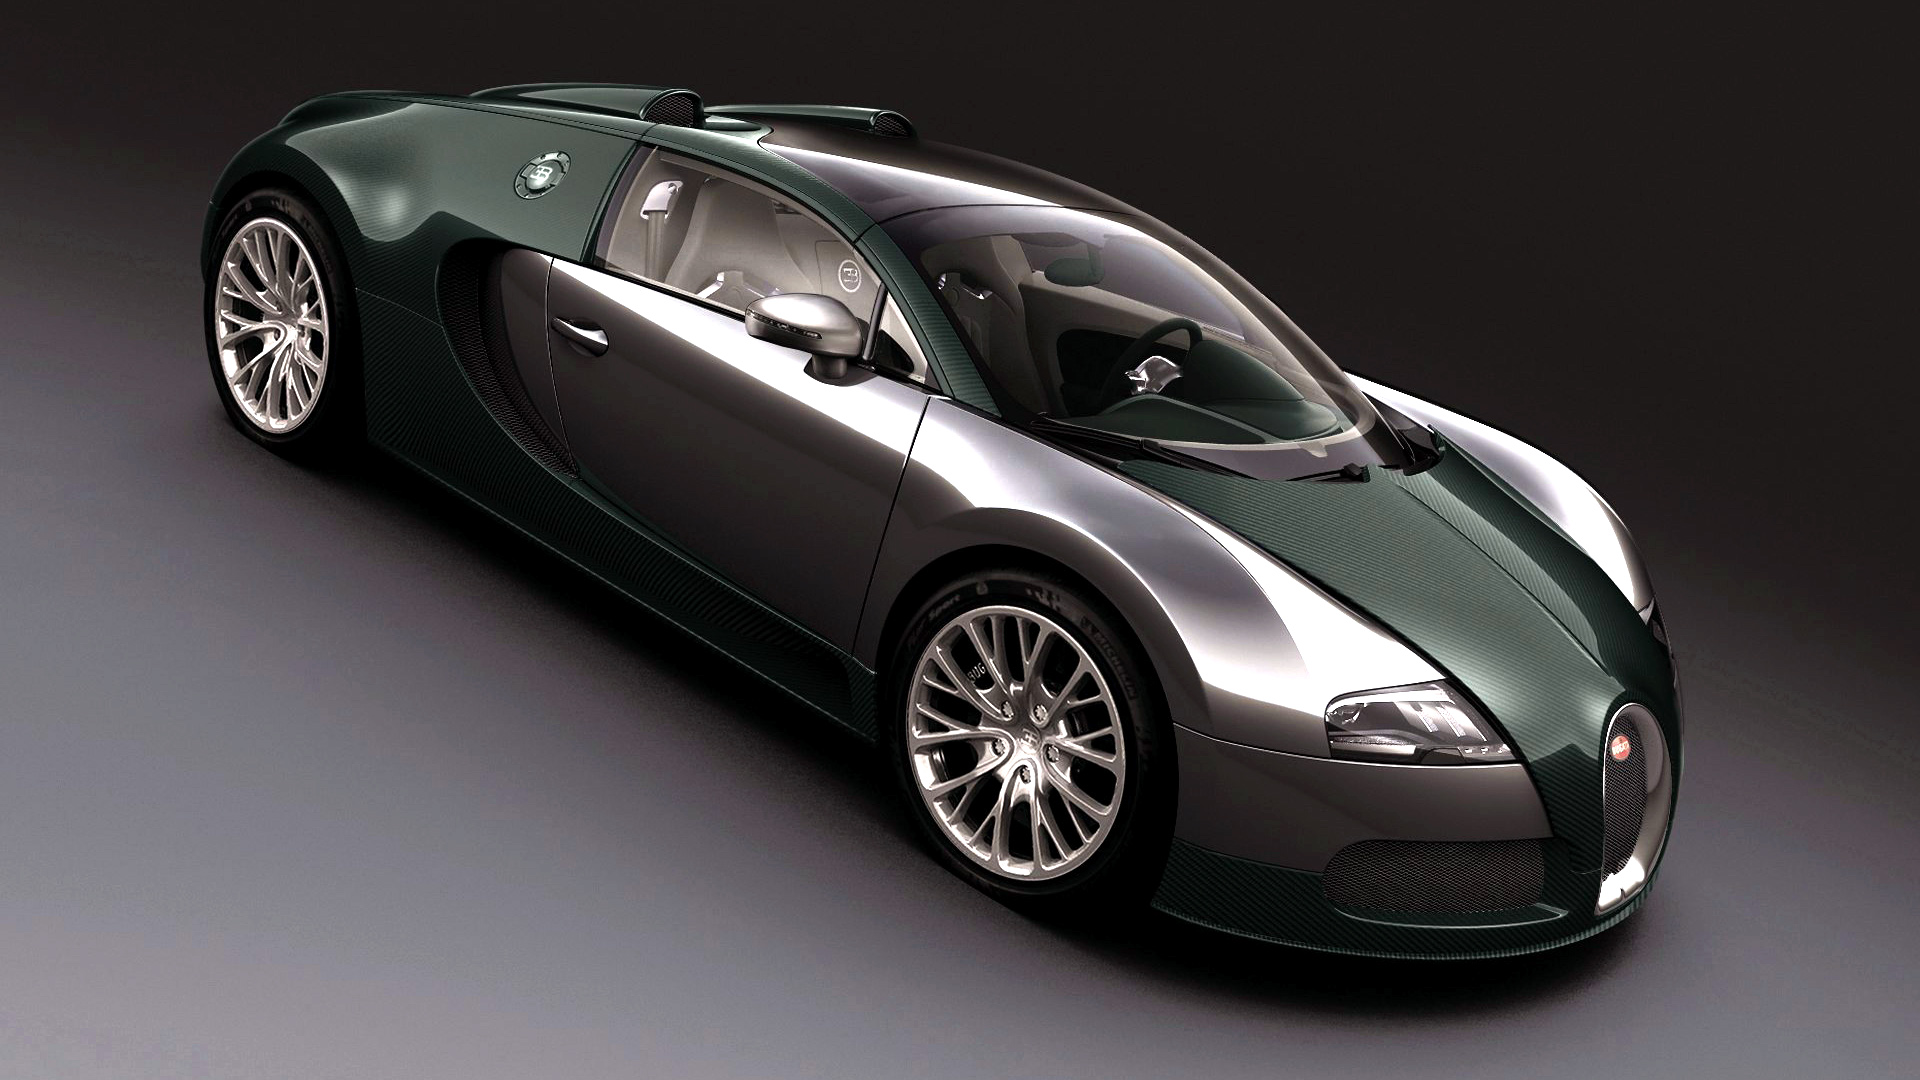  2011 Bugatti Veyron 16-4 Grand Sport Limited Edition Wallpaper.